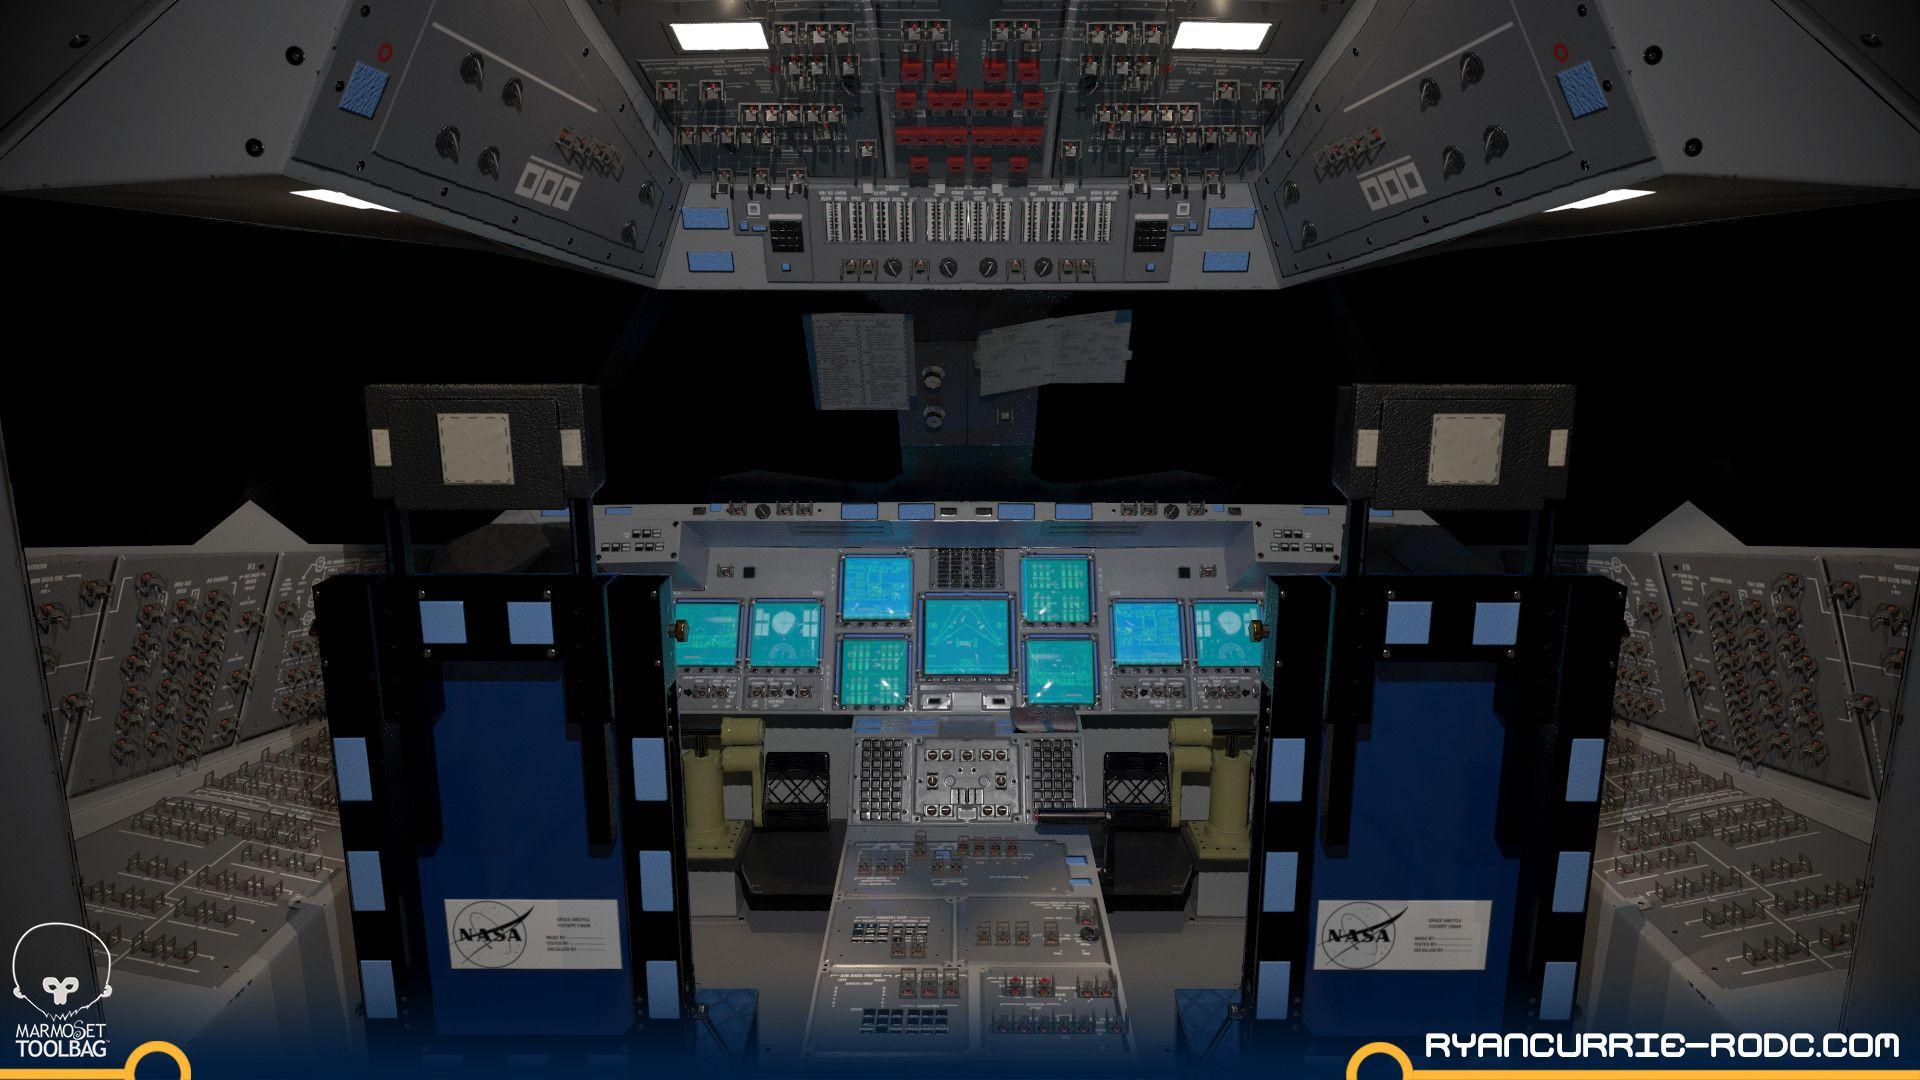 Space Shuttle Interior Deck, Ryan Currie